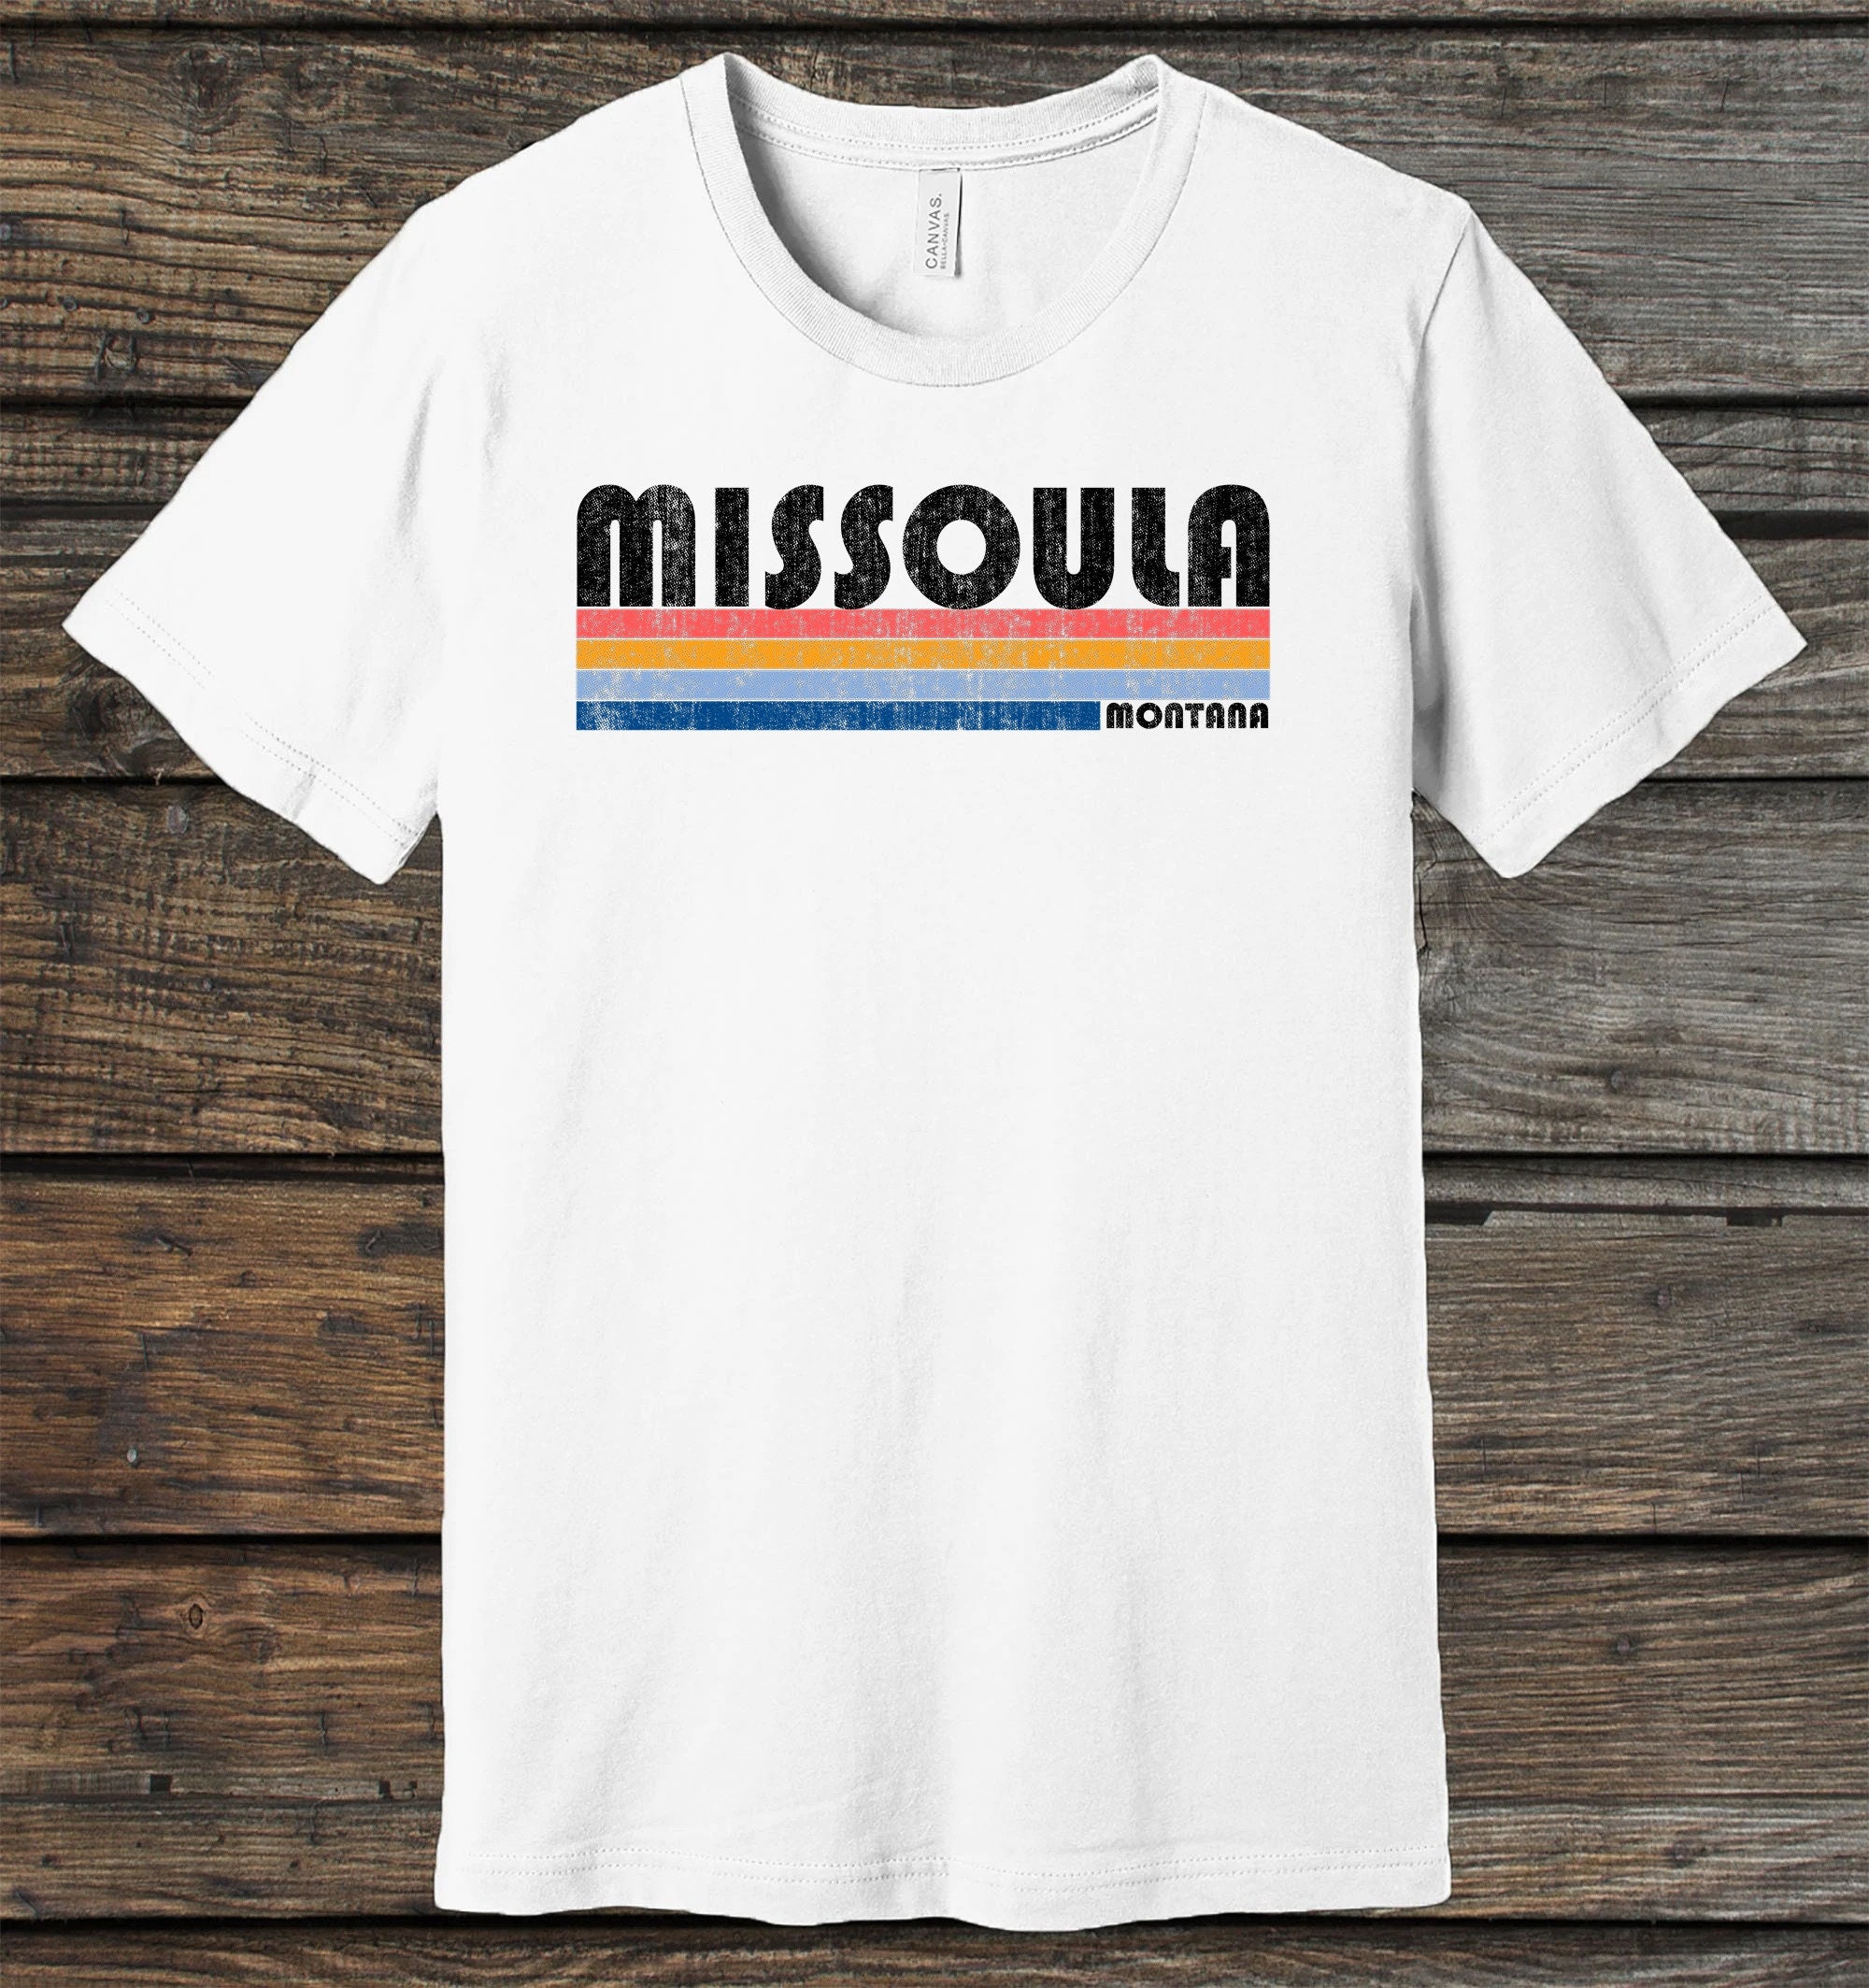 On Sale Now Vintage 70s 80s Style Missoula Montana Tshirt photo